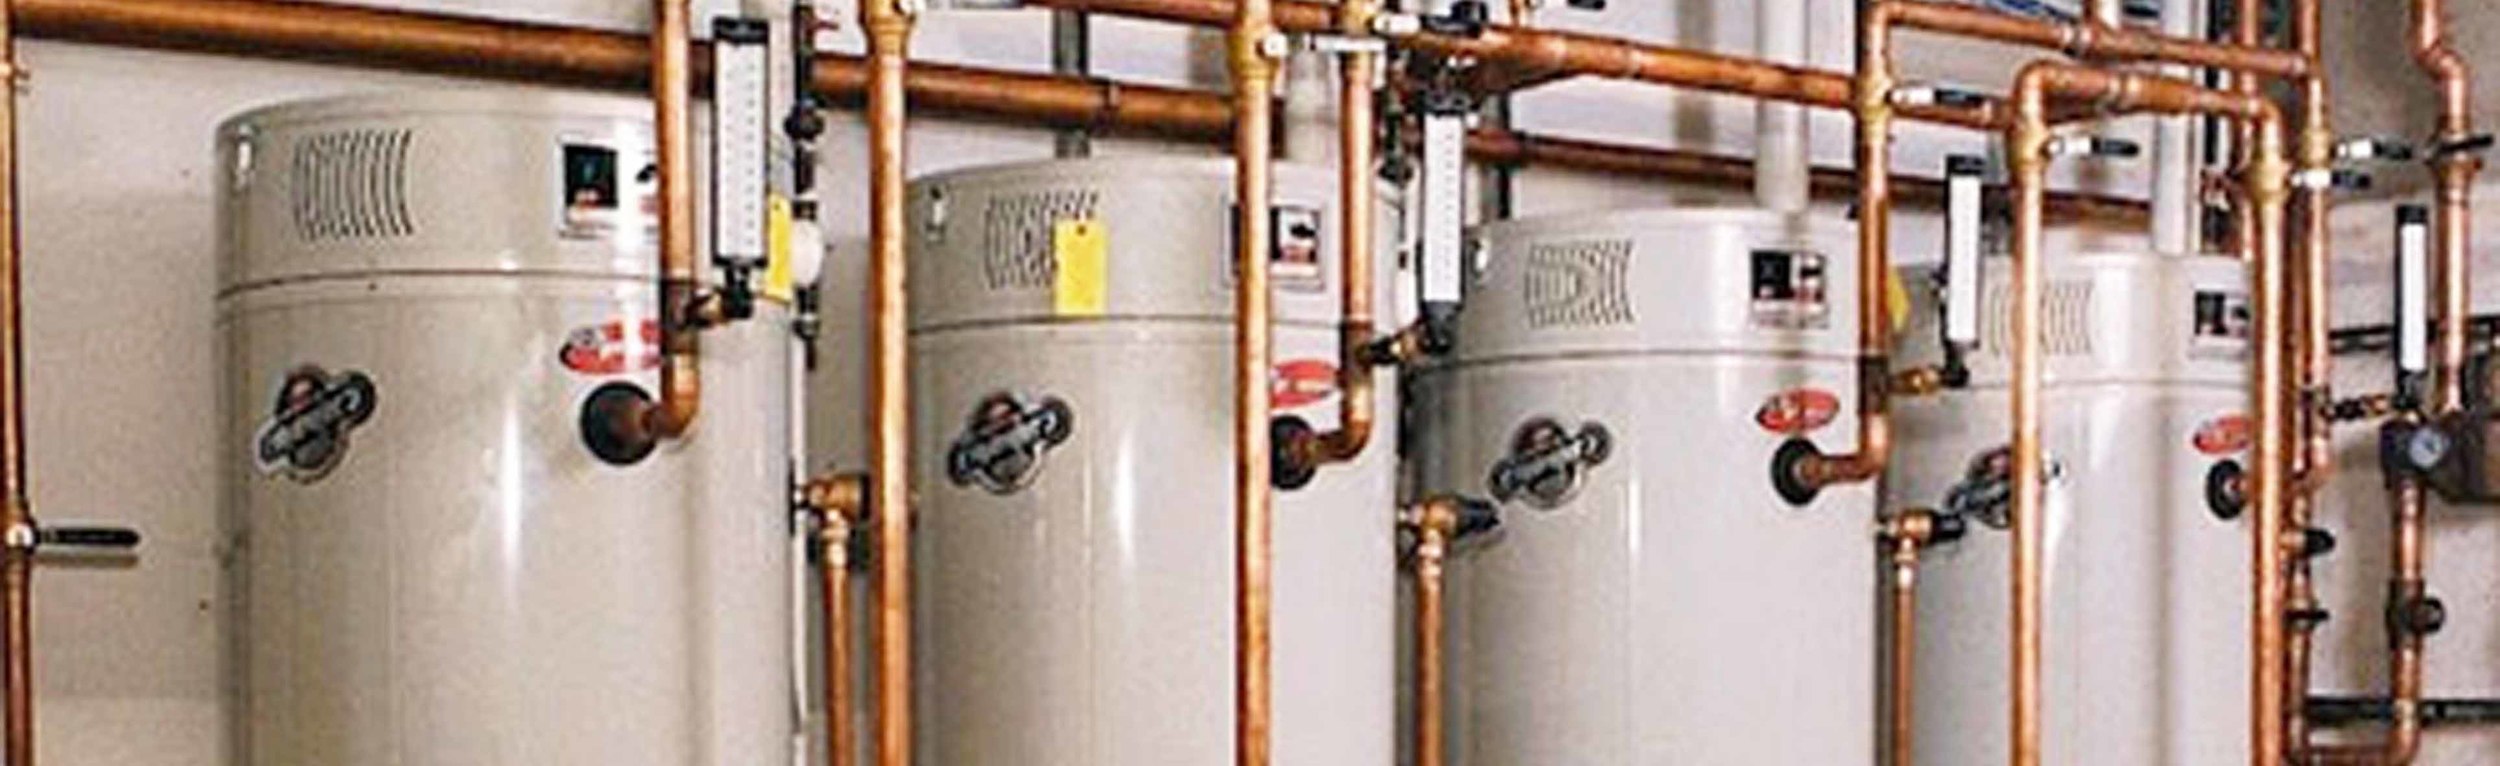 hot water gas repair queensland installation provincial plumbing and gas.jpg